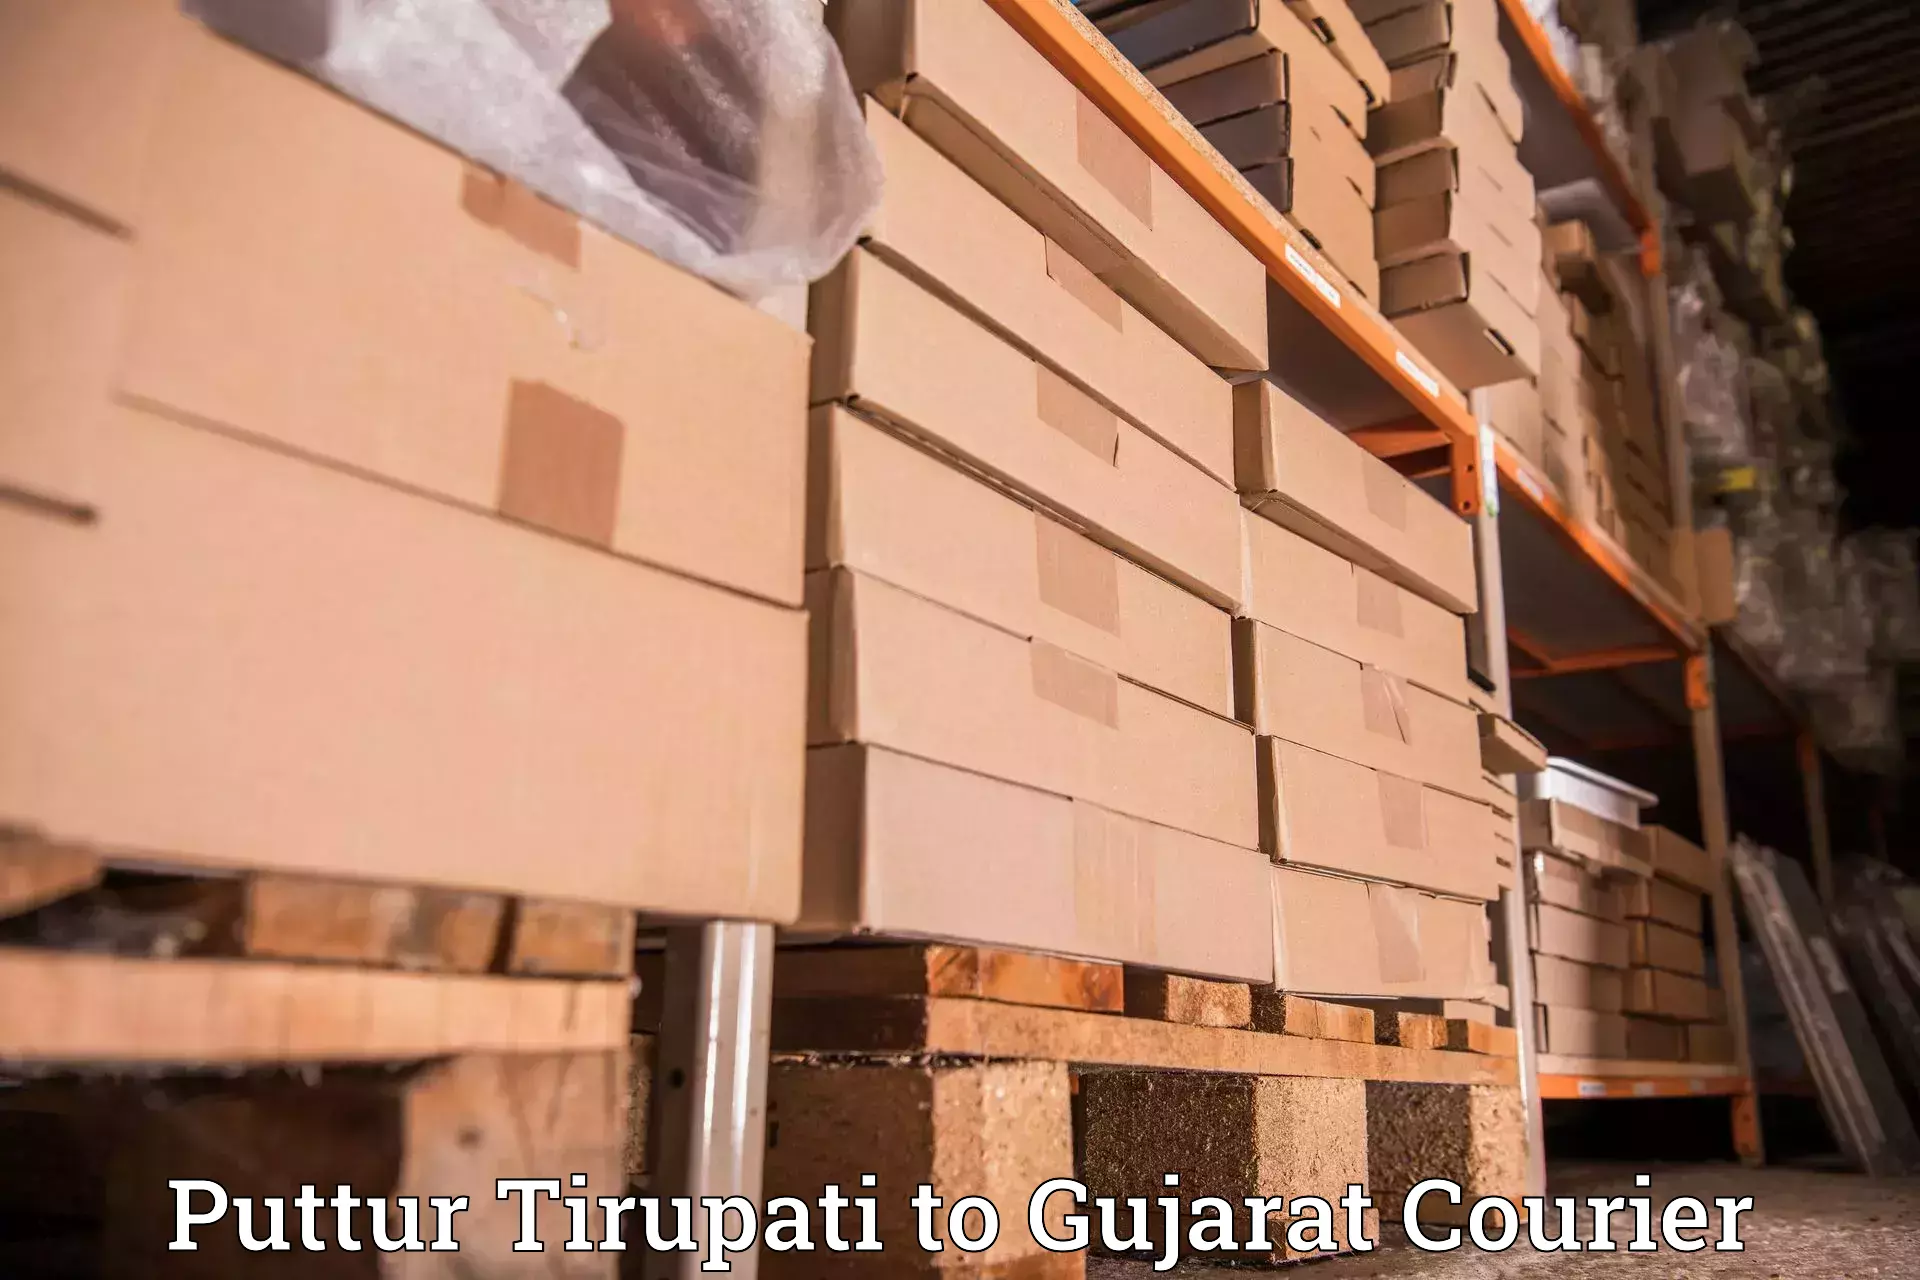 Express delivery capabilities Puttur Tirupati to Chotila